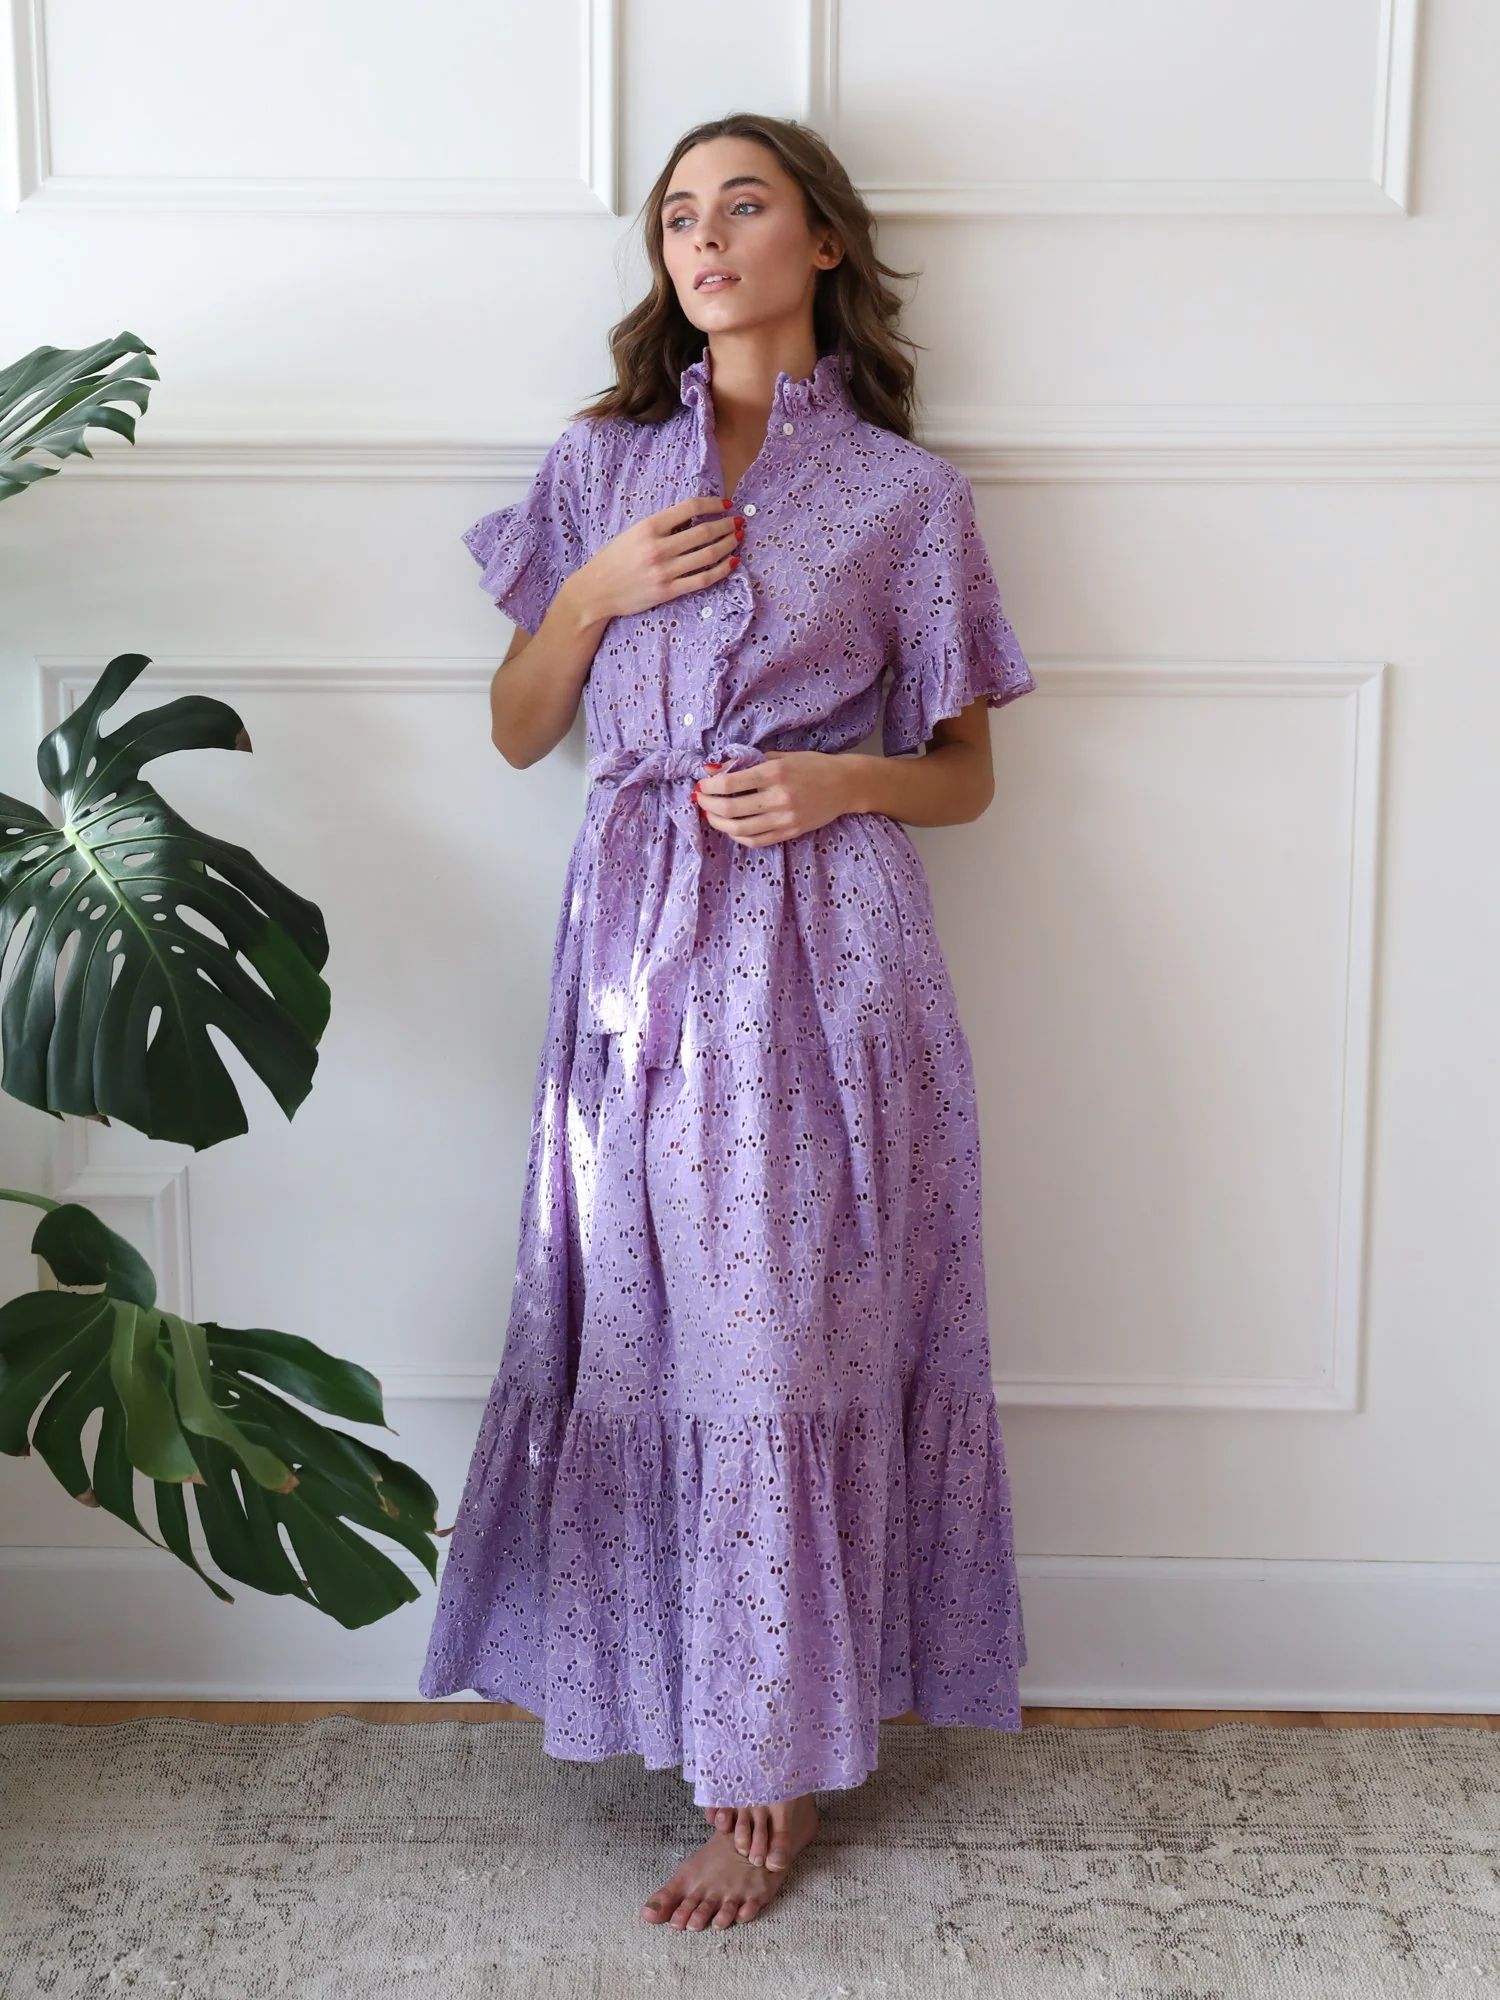 Shop Mille - Victoria Dress in Taffy Floral Eyelet | Mille